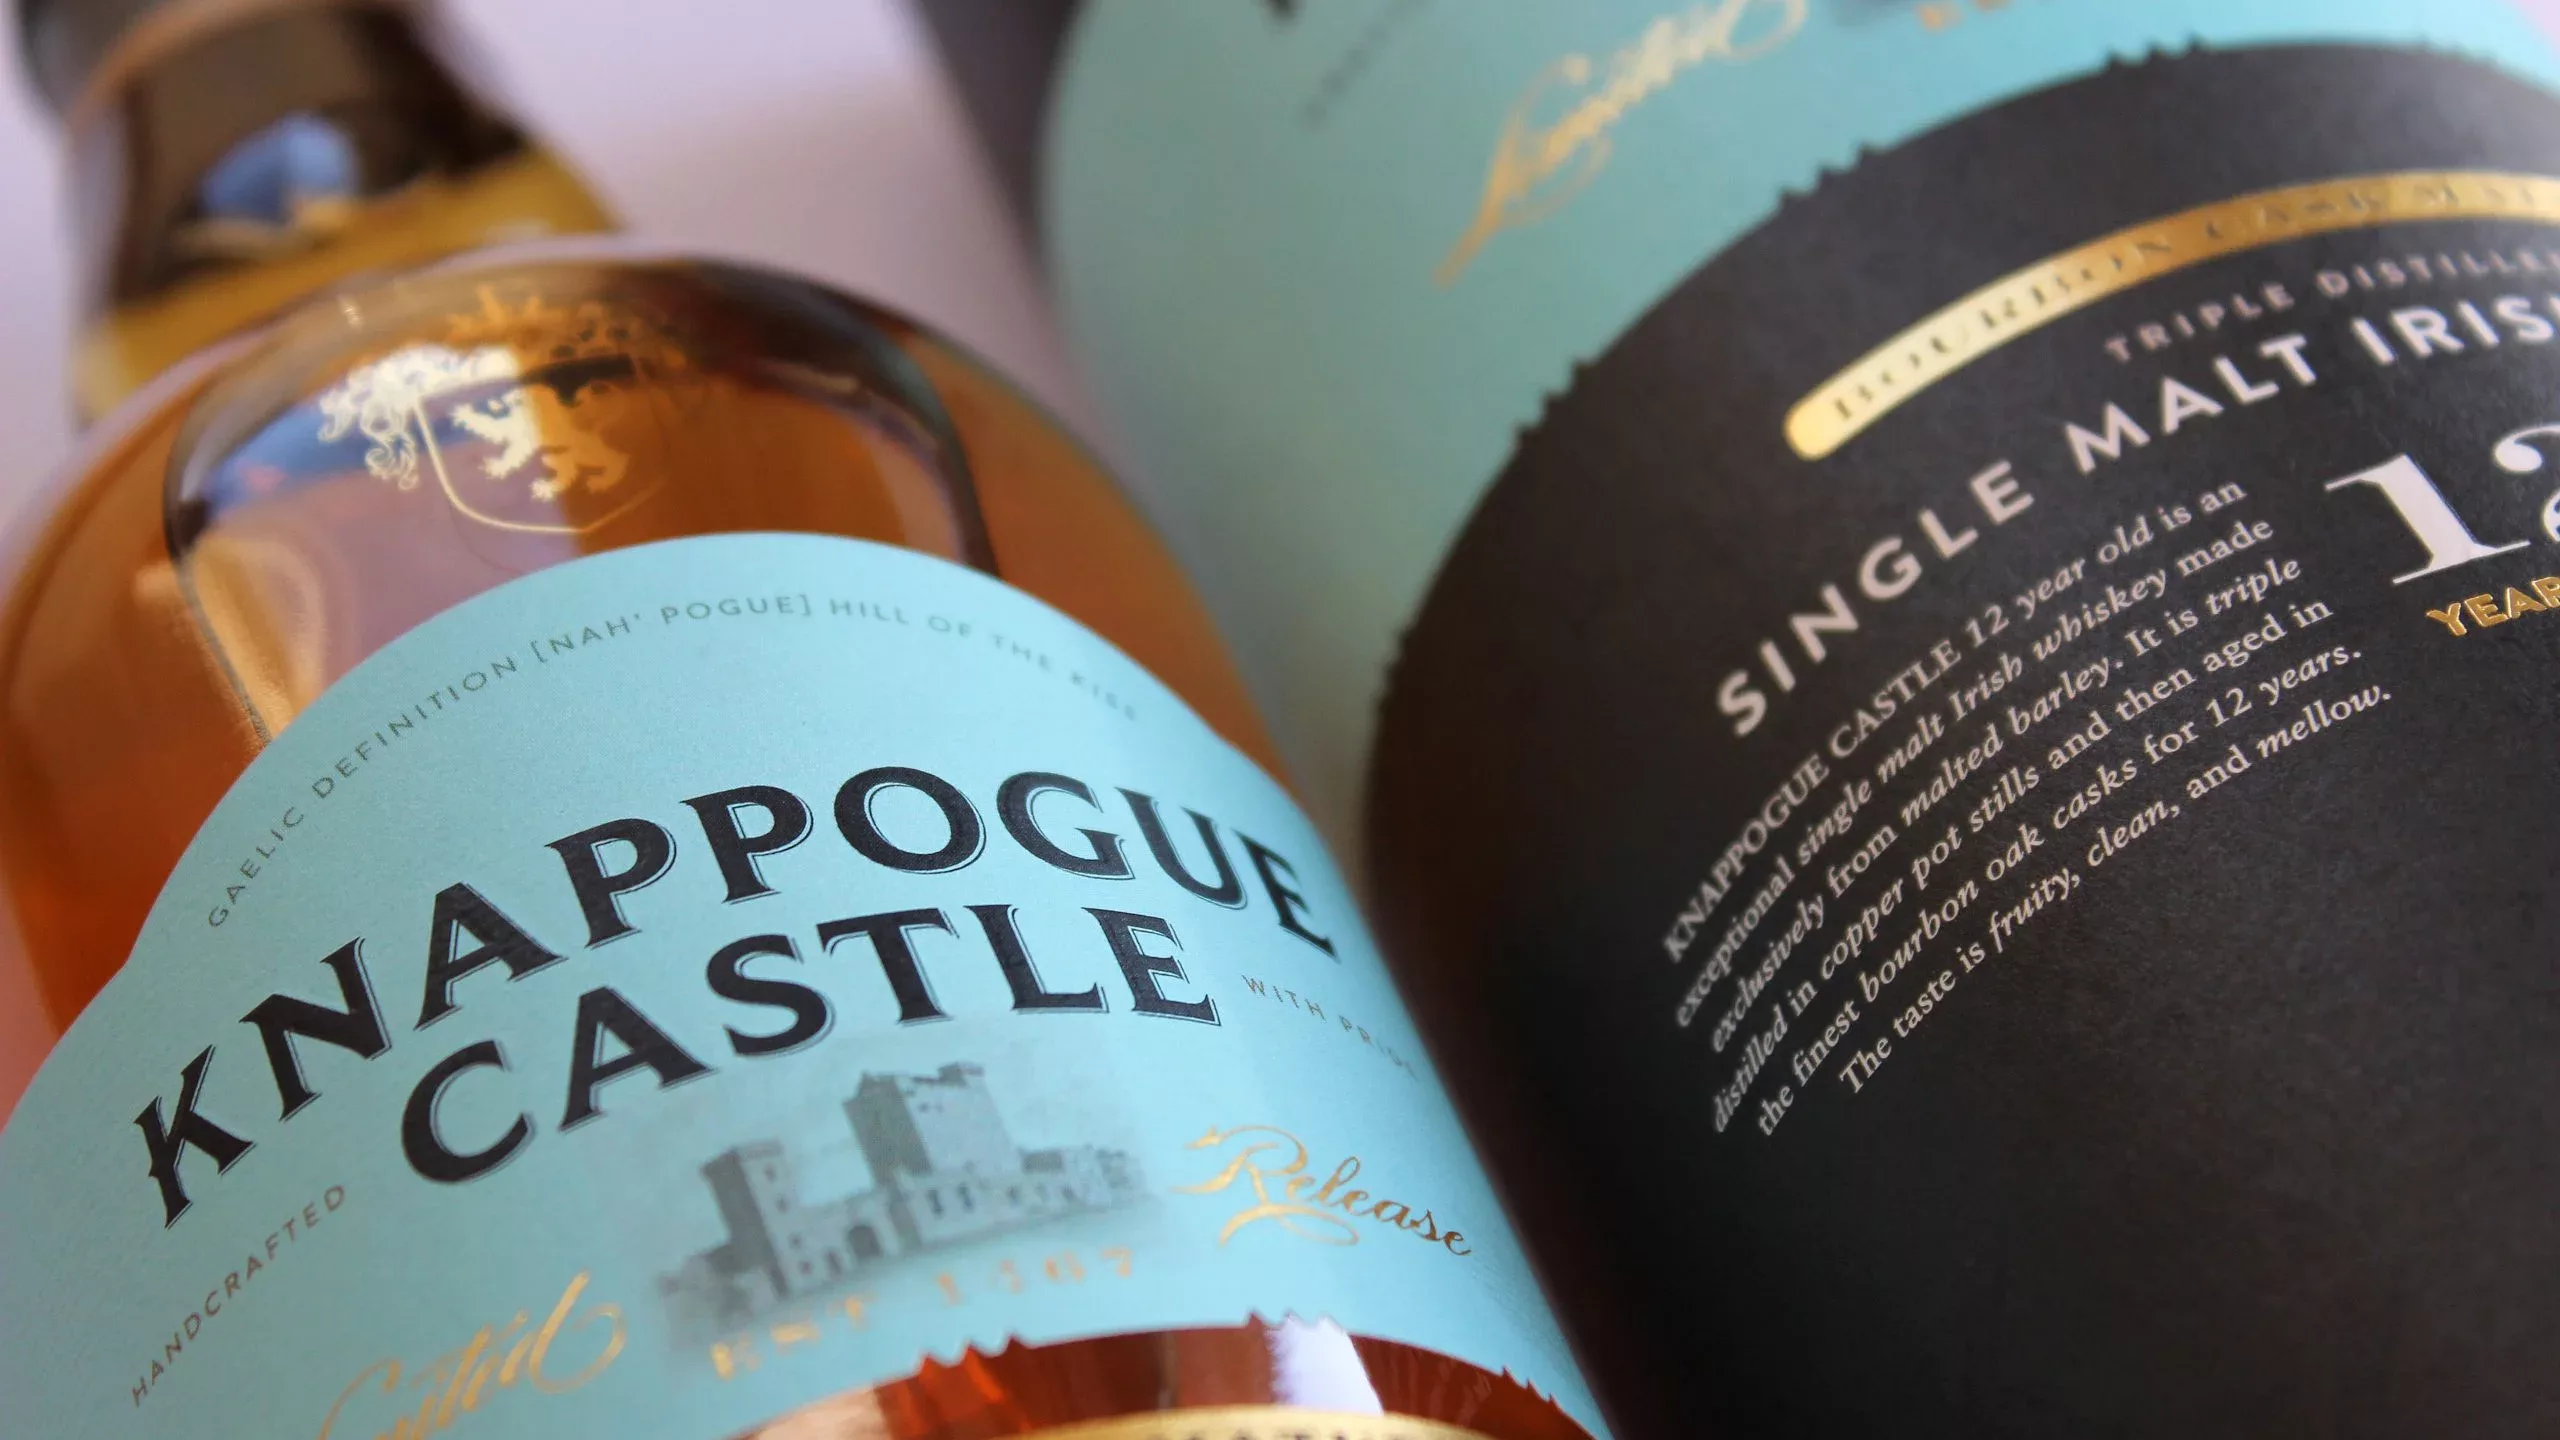 Irish Distillers - Knappogue Castle